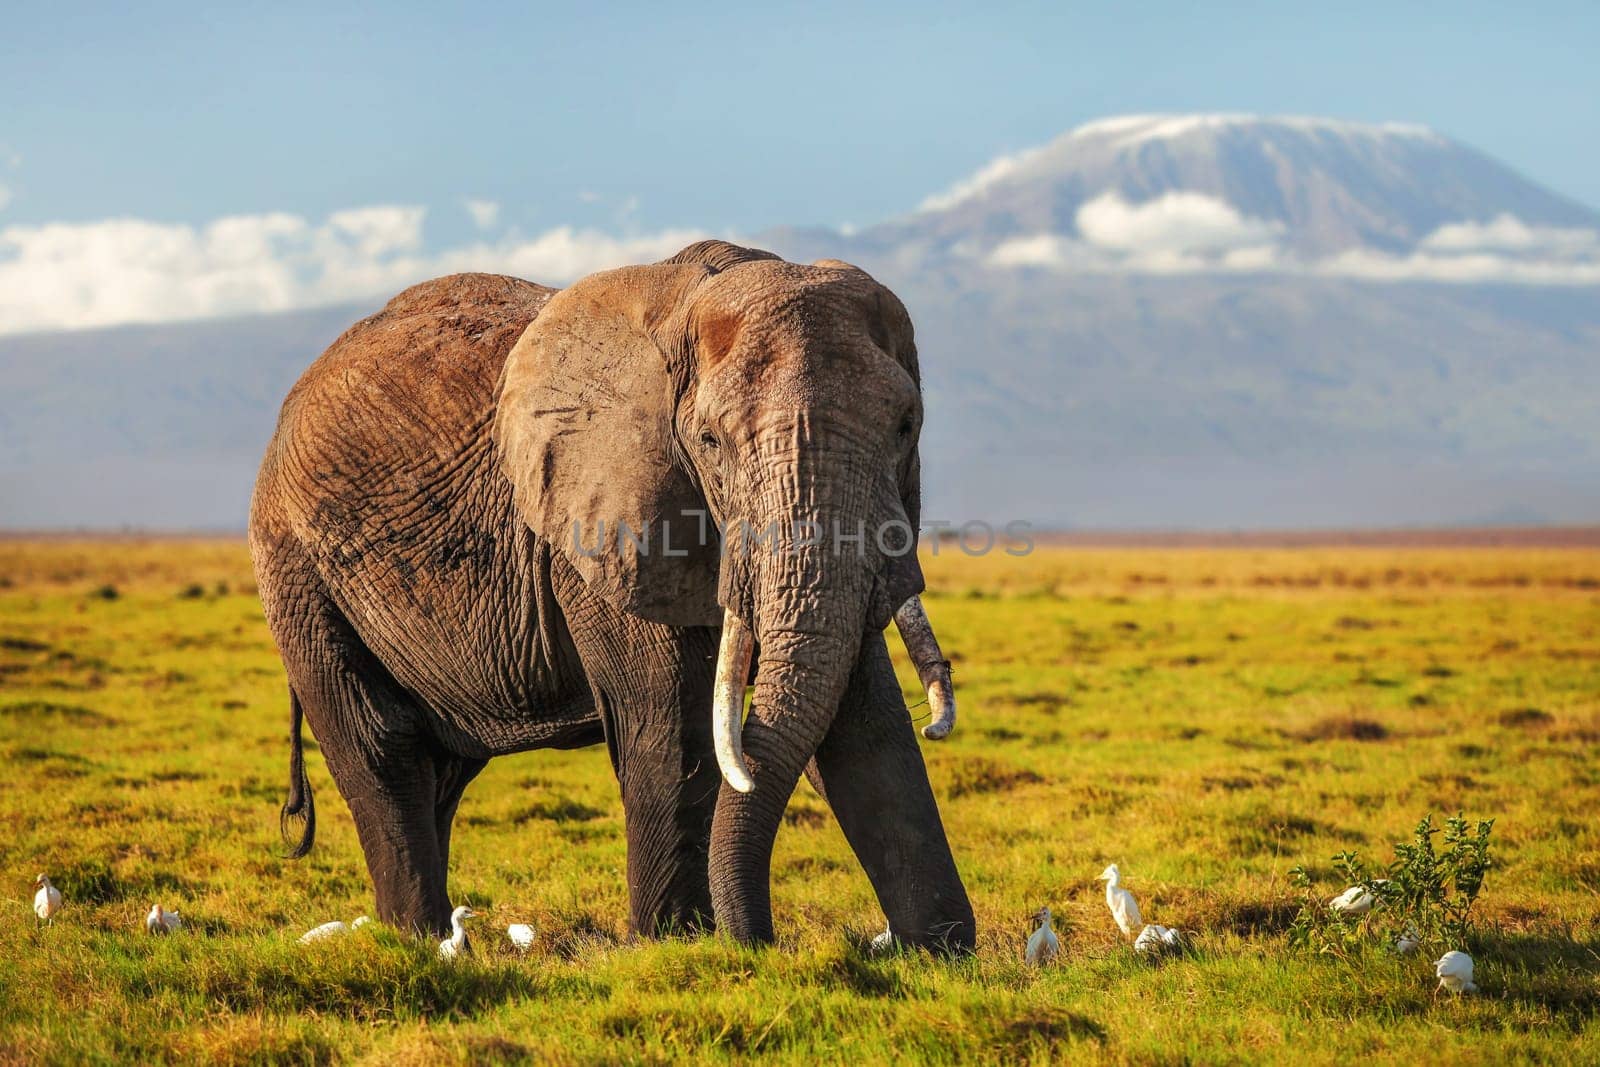 African bush elephant (Loxodonta africana) in low grass, white heron birds at feet, mount Kilimanjaro in background.